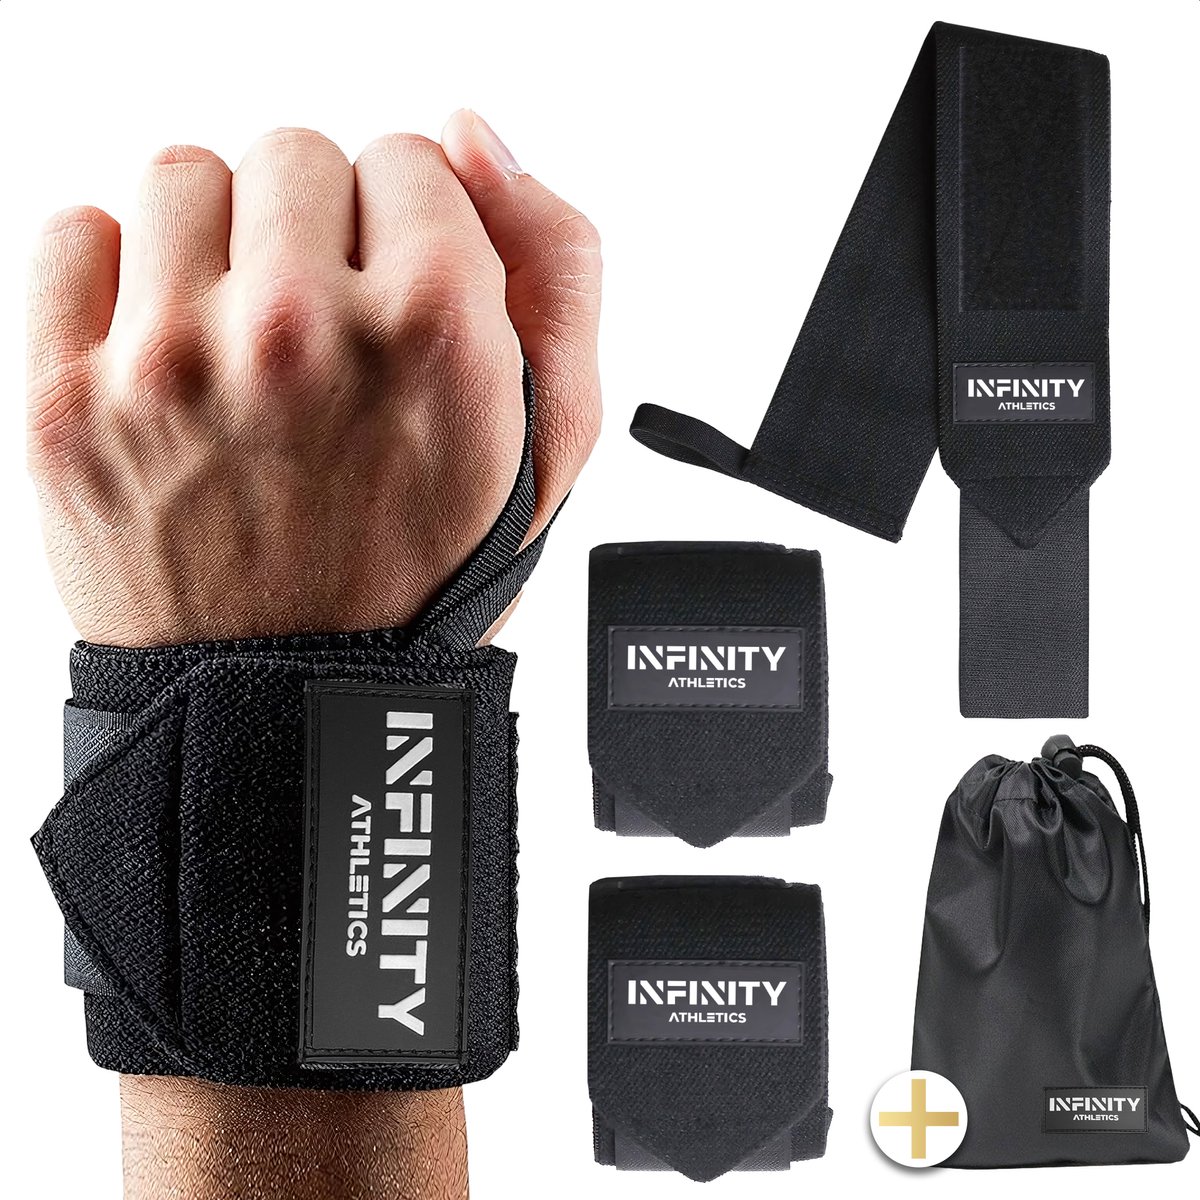 INFINITY ATHLETICS Wrist Wraps - Fitness, CrossFit & Powerliften - Krachttraining Polsband - Sterk Klittenband - Til Zwaardere Gewichten - Gratis Opbergzakje - Zwart